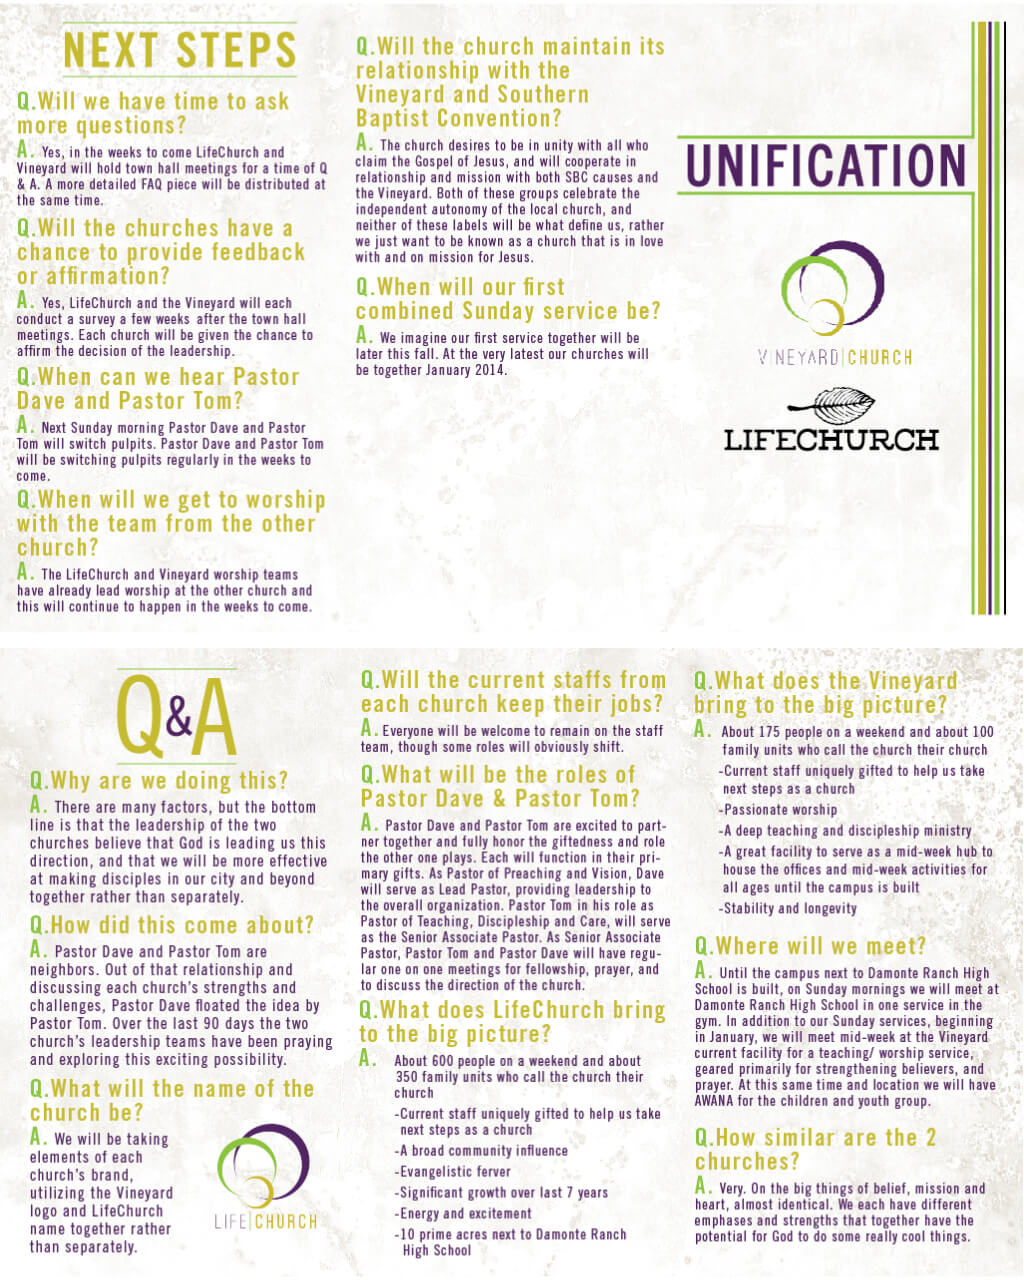 Unification brochure design